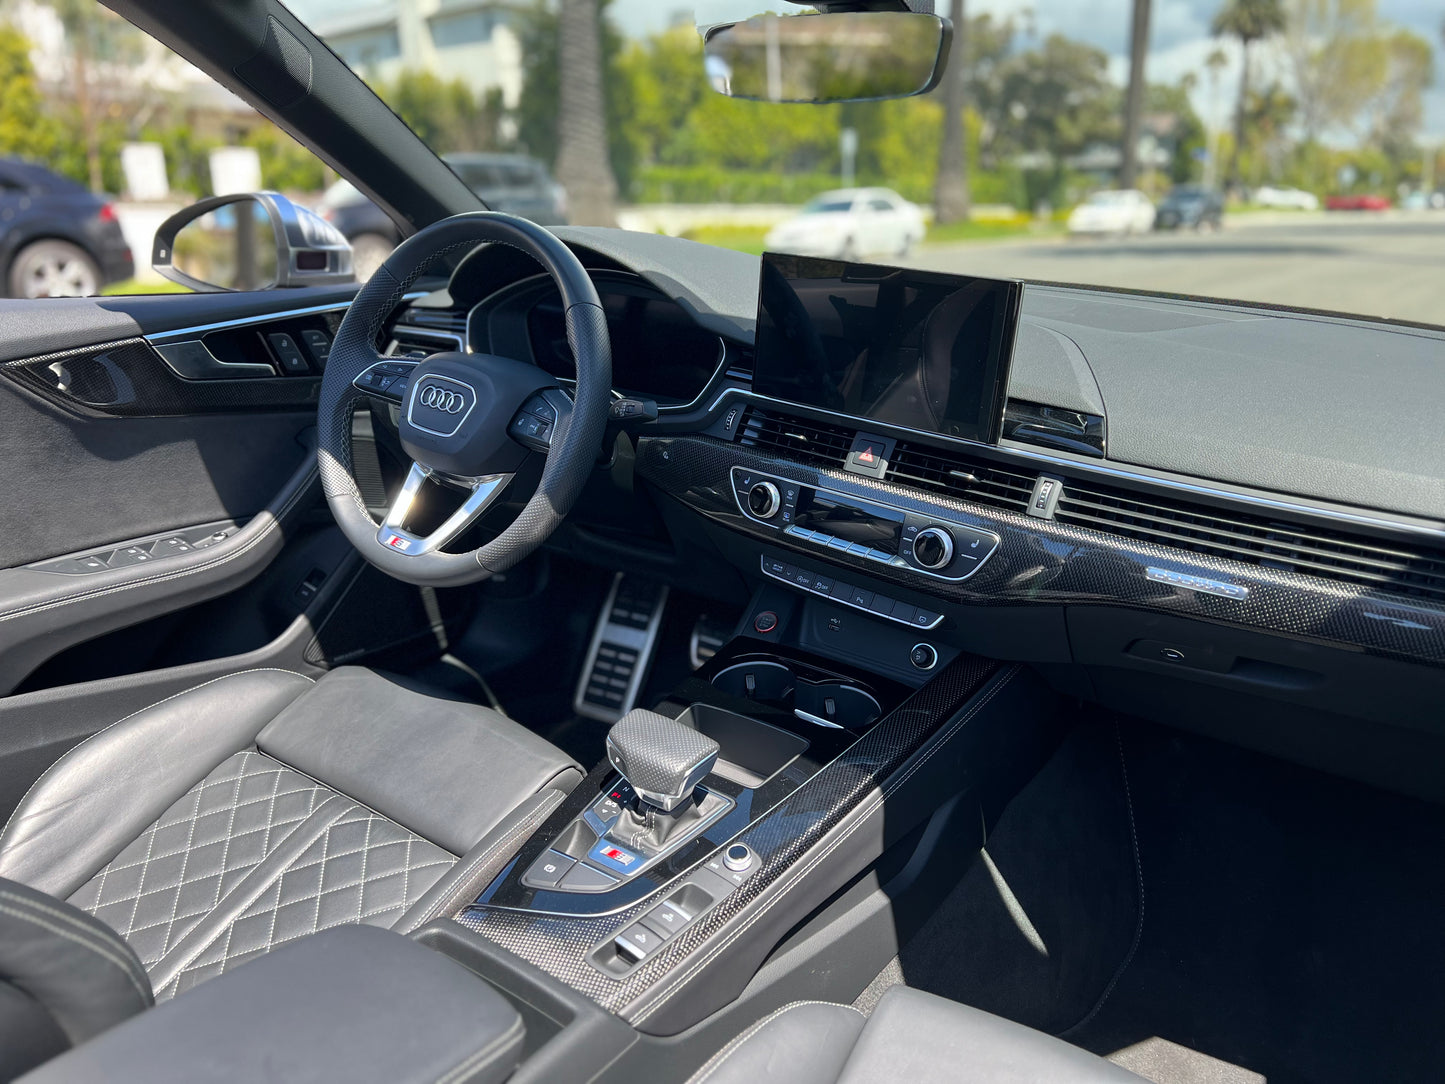 Audi S5 Convertible